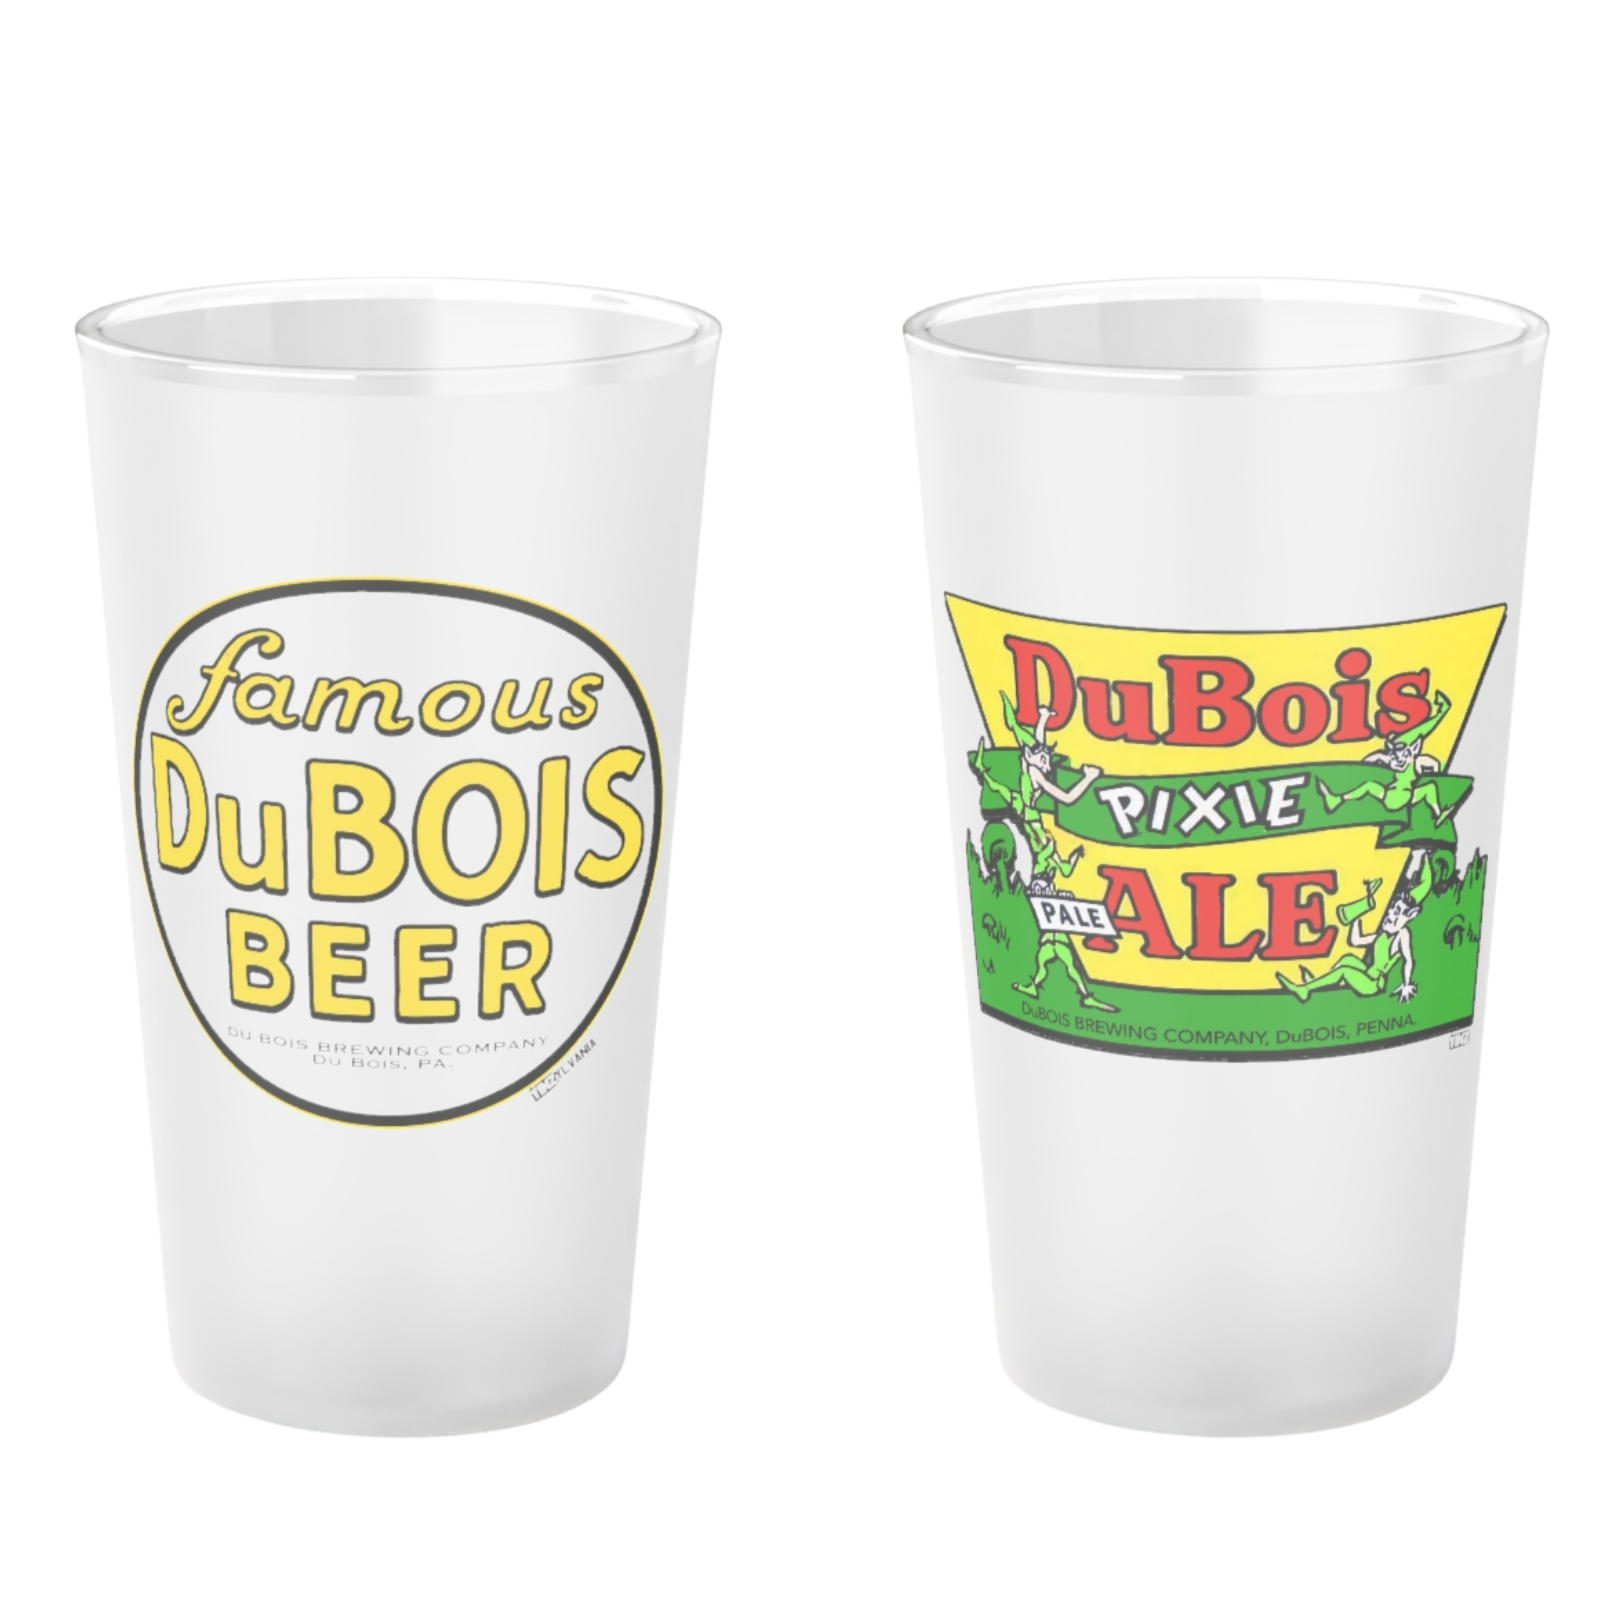 DuBois Retro Brew Set of 2 Pint Glasses | Famous DuBois Beer | DuBois Pixie Ale - Yinzylvania